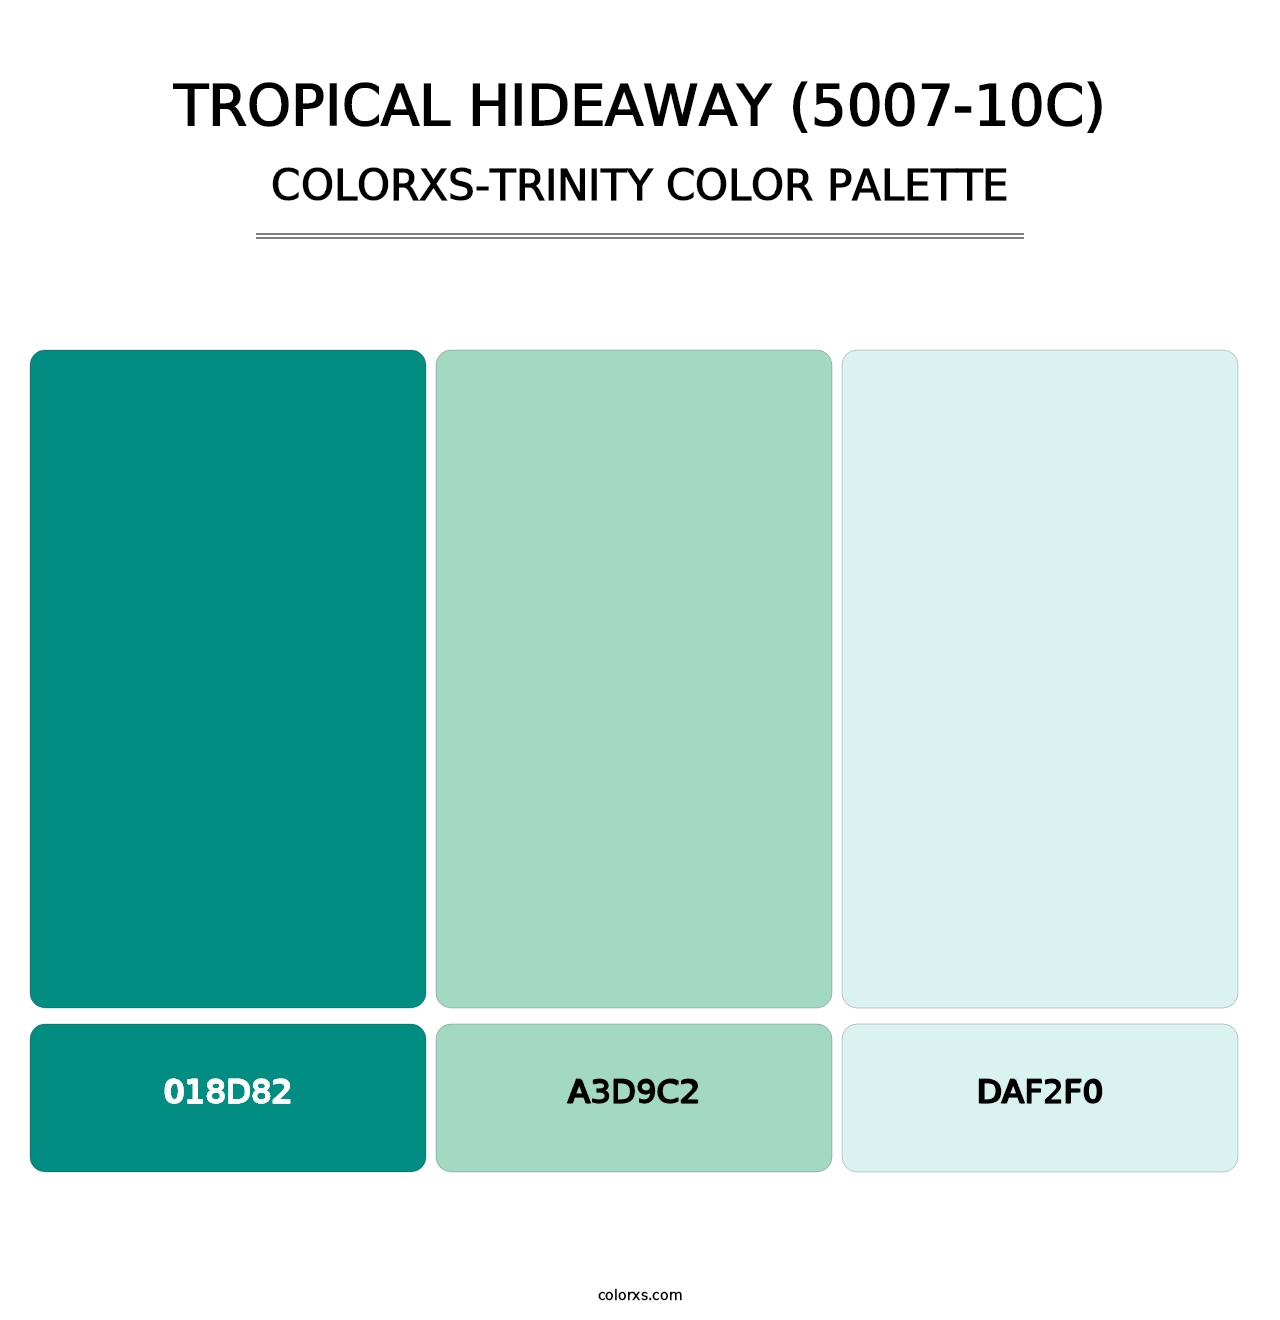 Tropical Hideaway (5007-10C) - Colorxs Trinity Palette